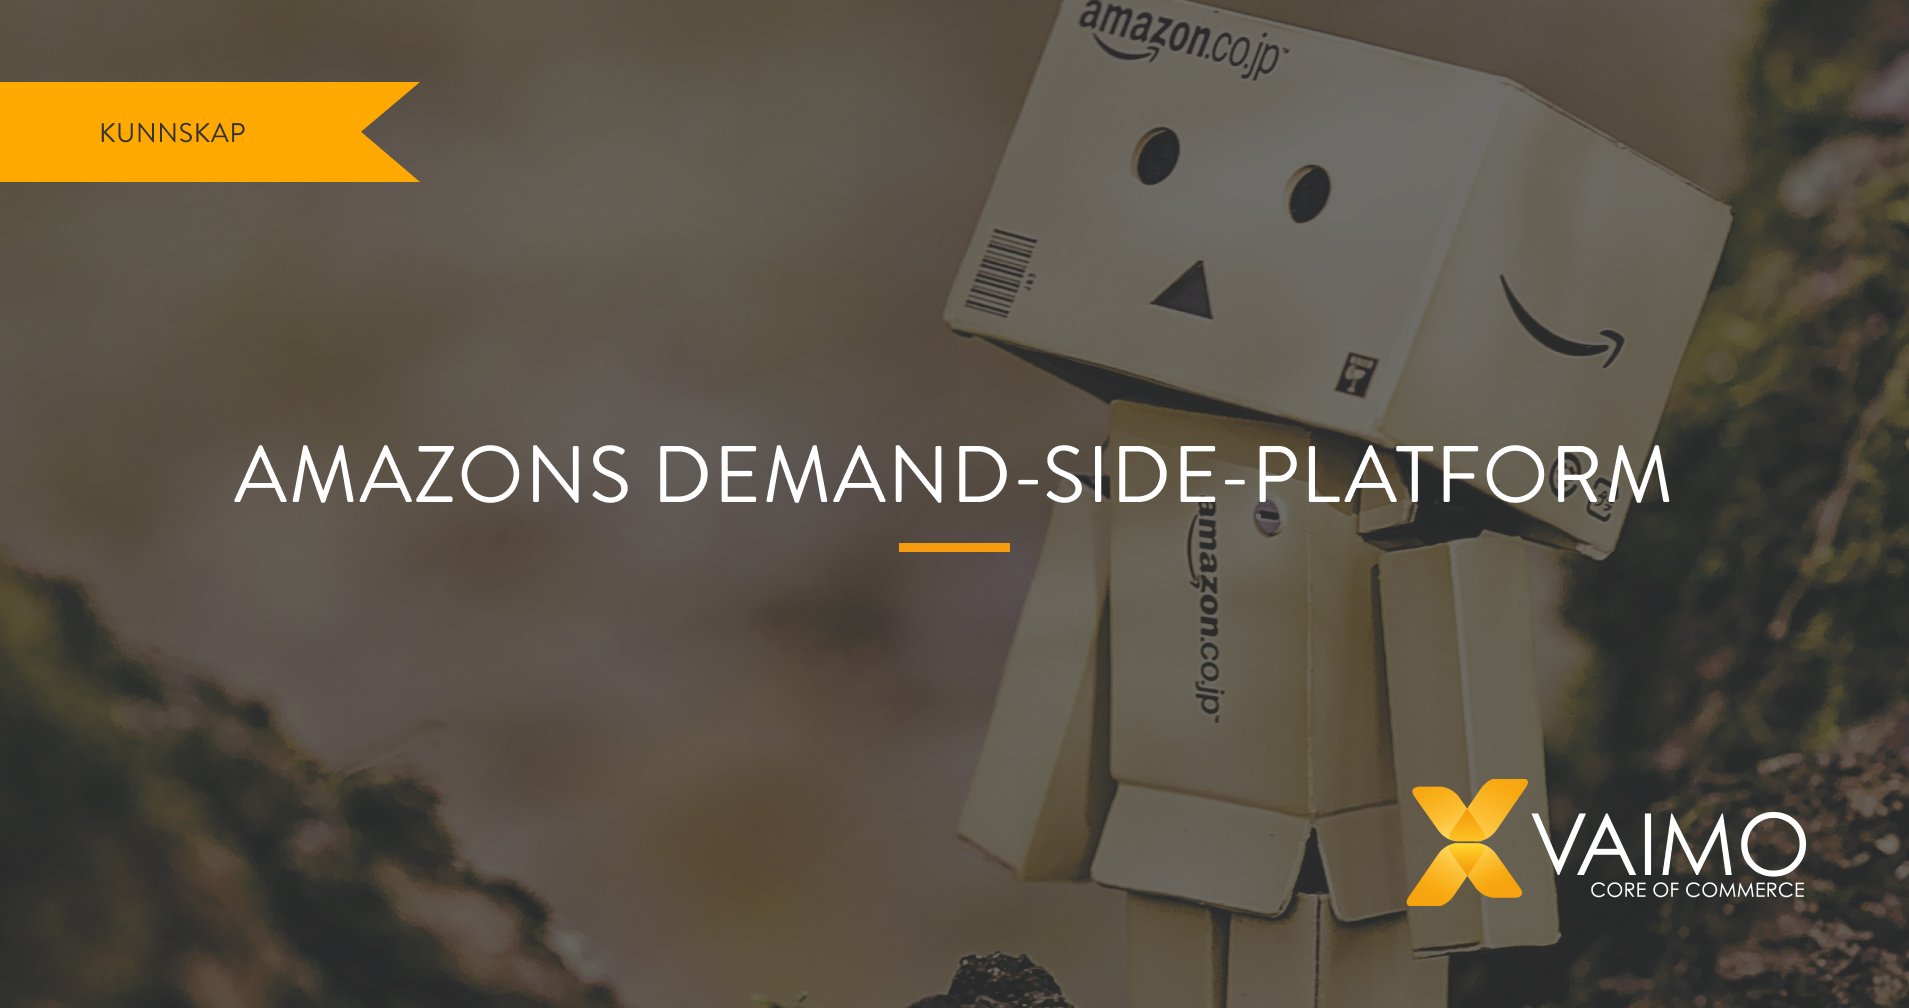 Amazon demand-side-platform